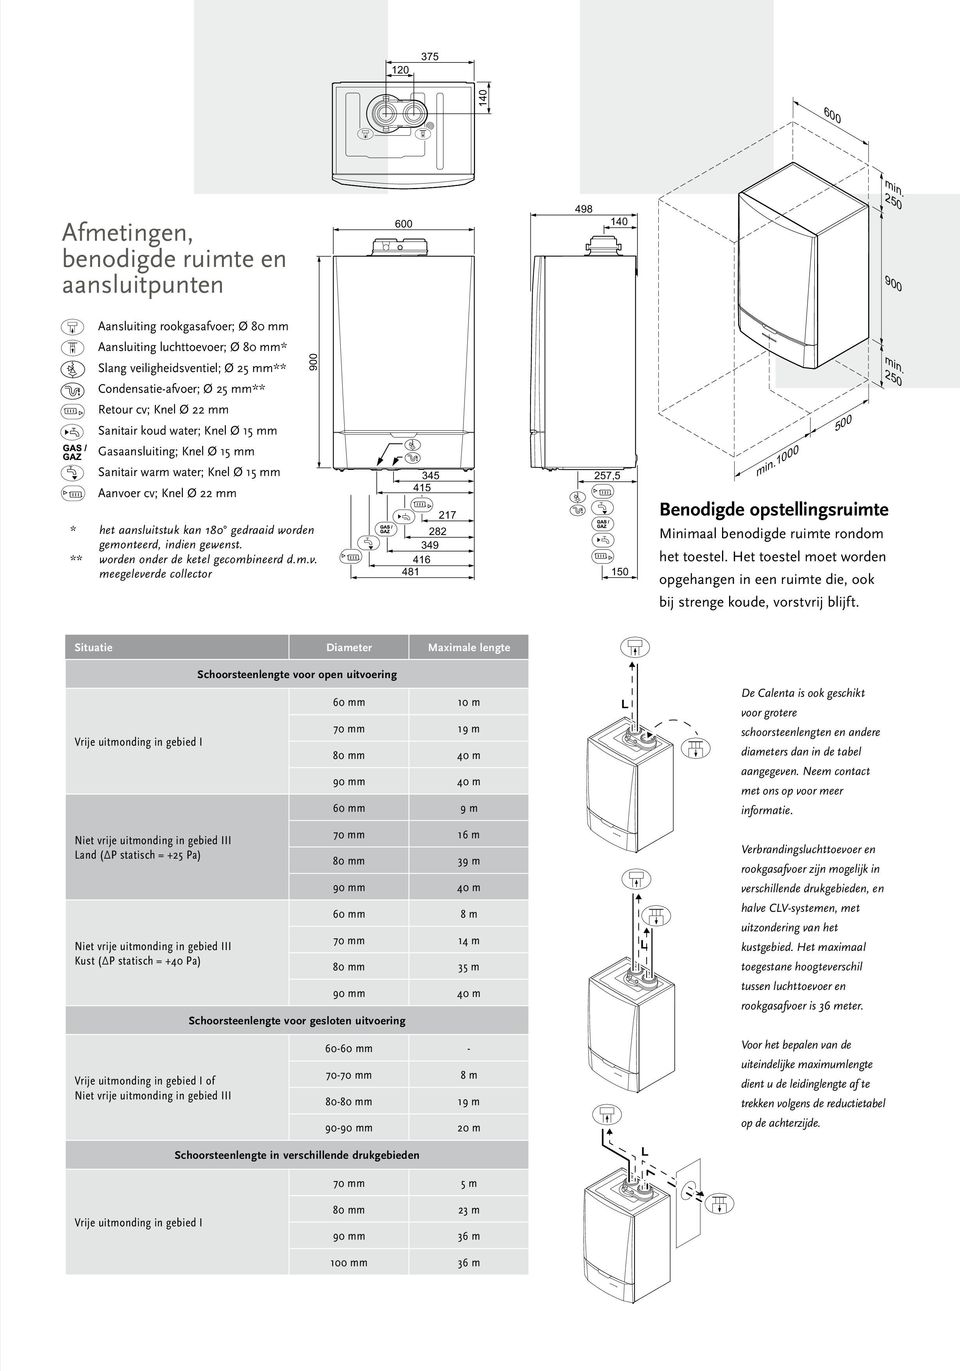 mm Gasaansluiting; Knel Ø 15 mm Sanitair warm water; Knel Ø 15 mm Aanvoer cv; Knel Ø 22 mm 900 900 * het aansluitstuk kan 180 gedraaid worden gemonteerd, indien gewenst.